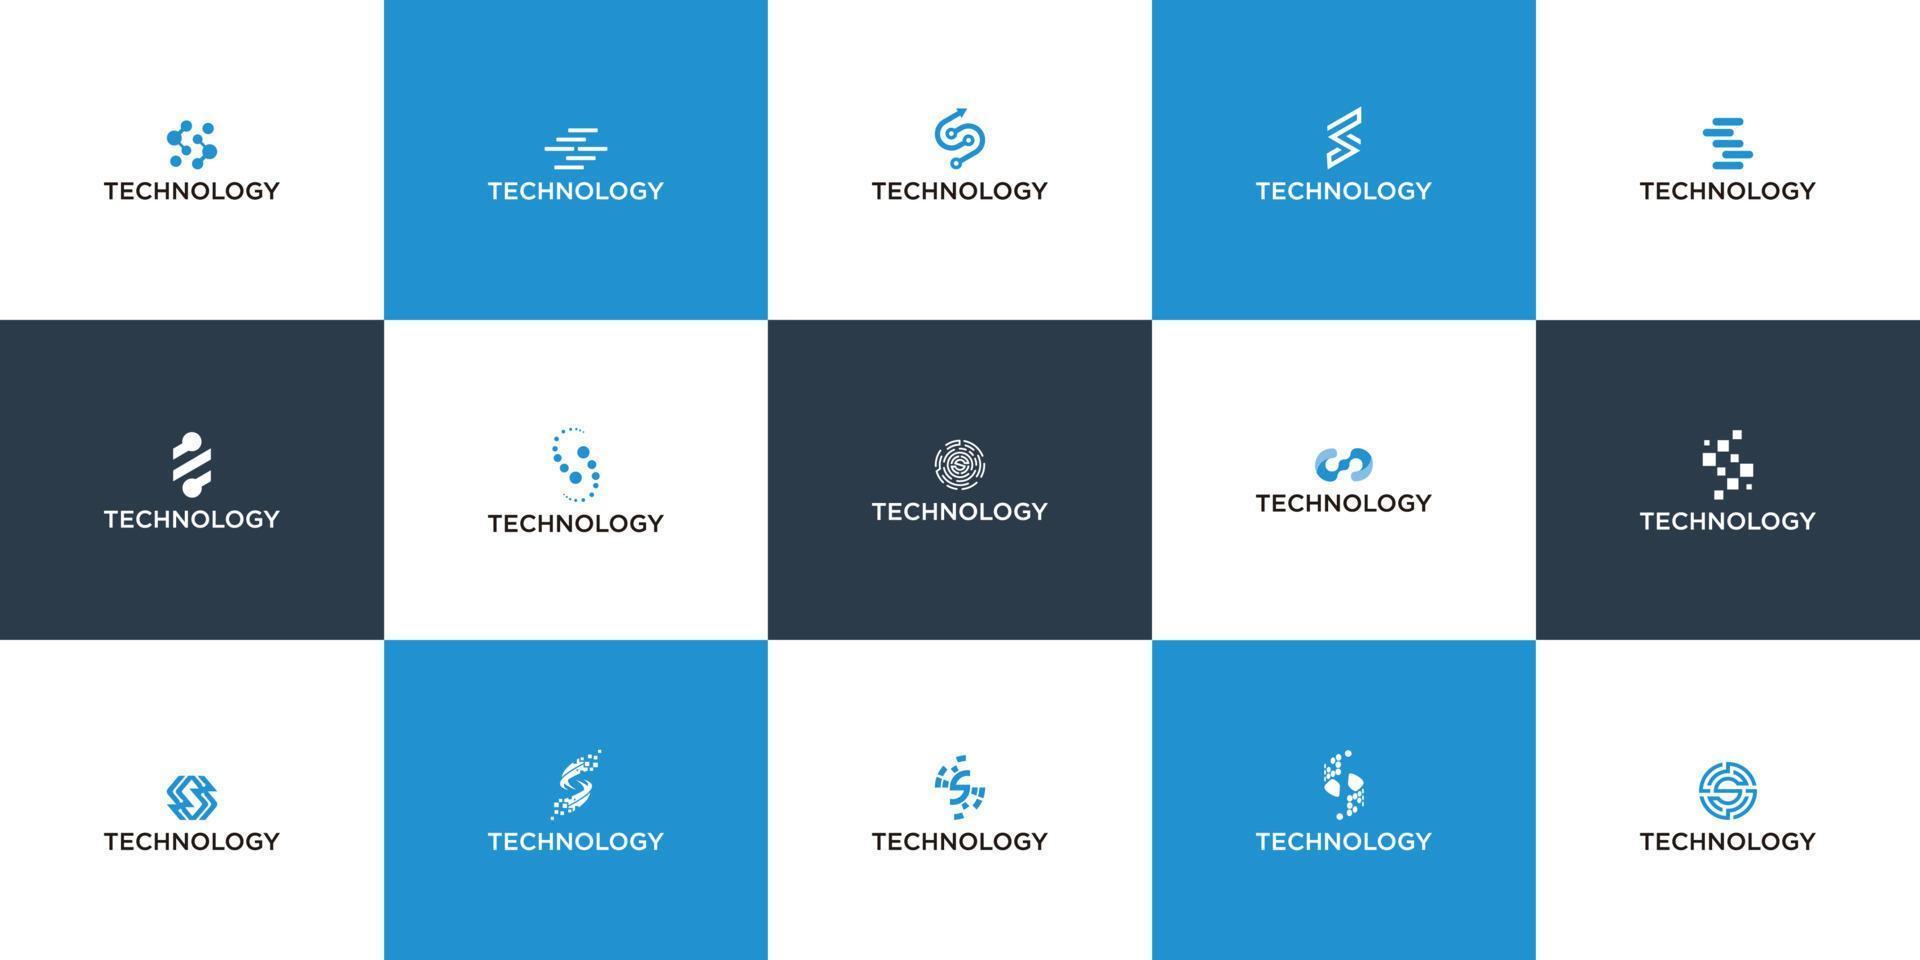 conjunto de elementos infográficos logotipo de tecnología de letra s marca comercial moderna para empresa digital vector